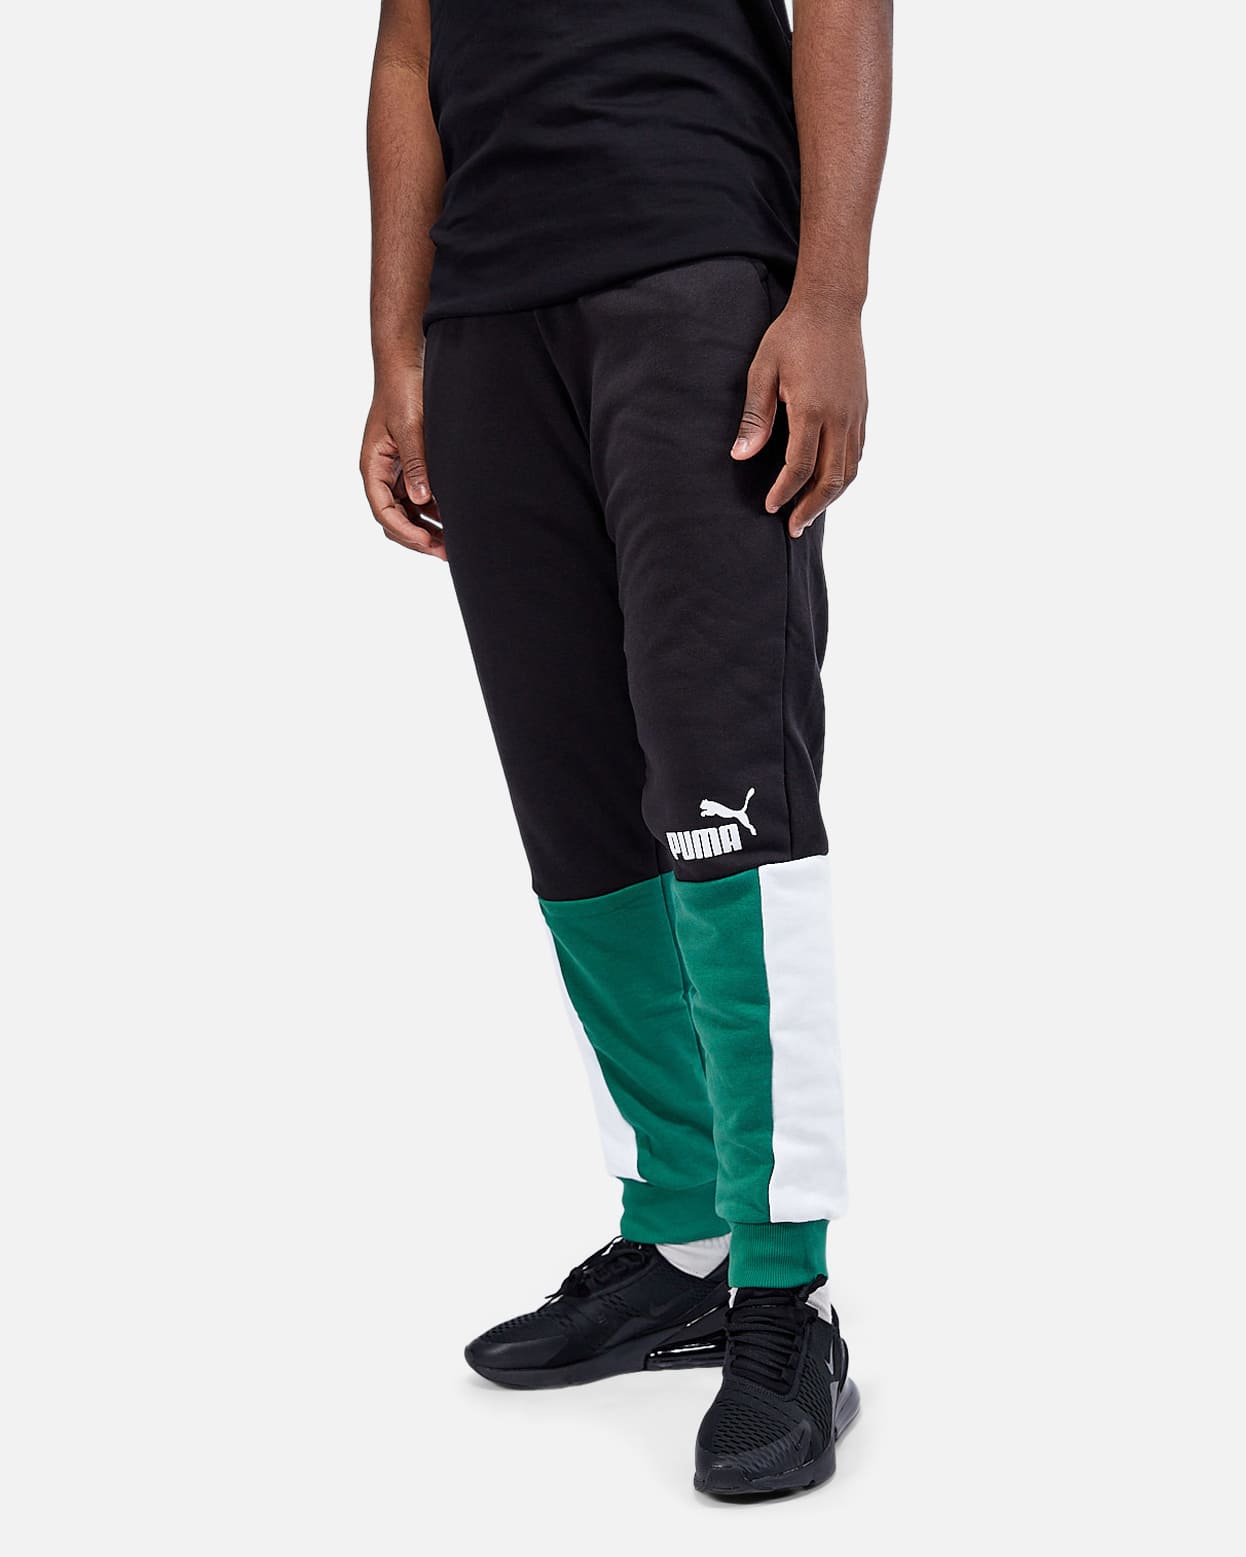 Puma Power Pants - Black/White/Green